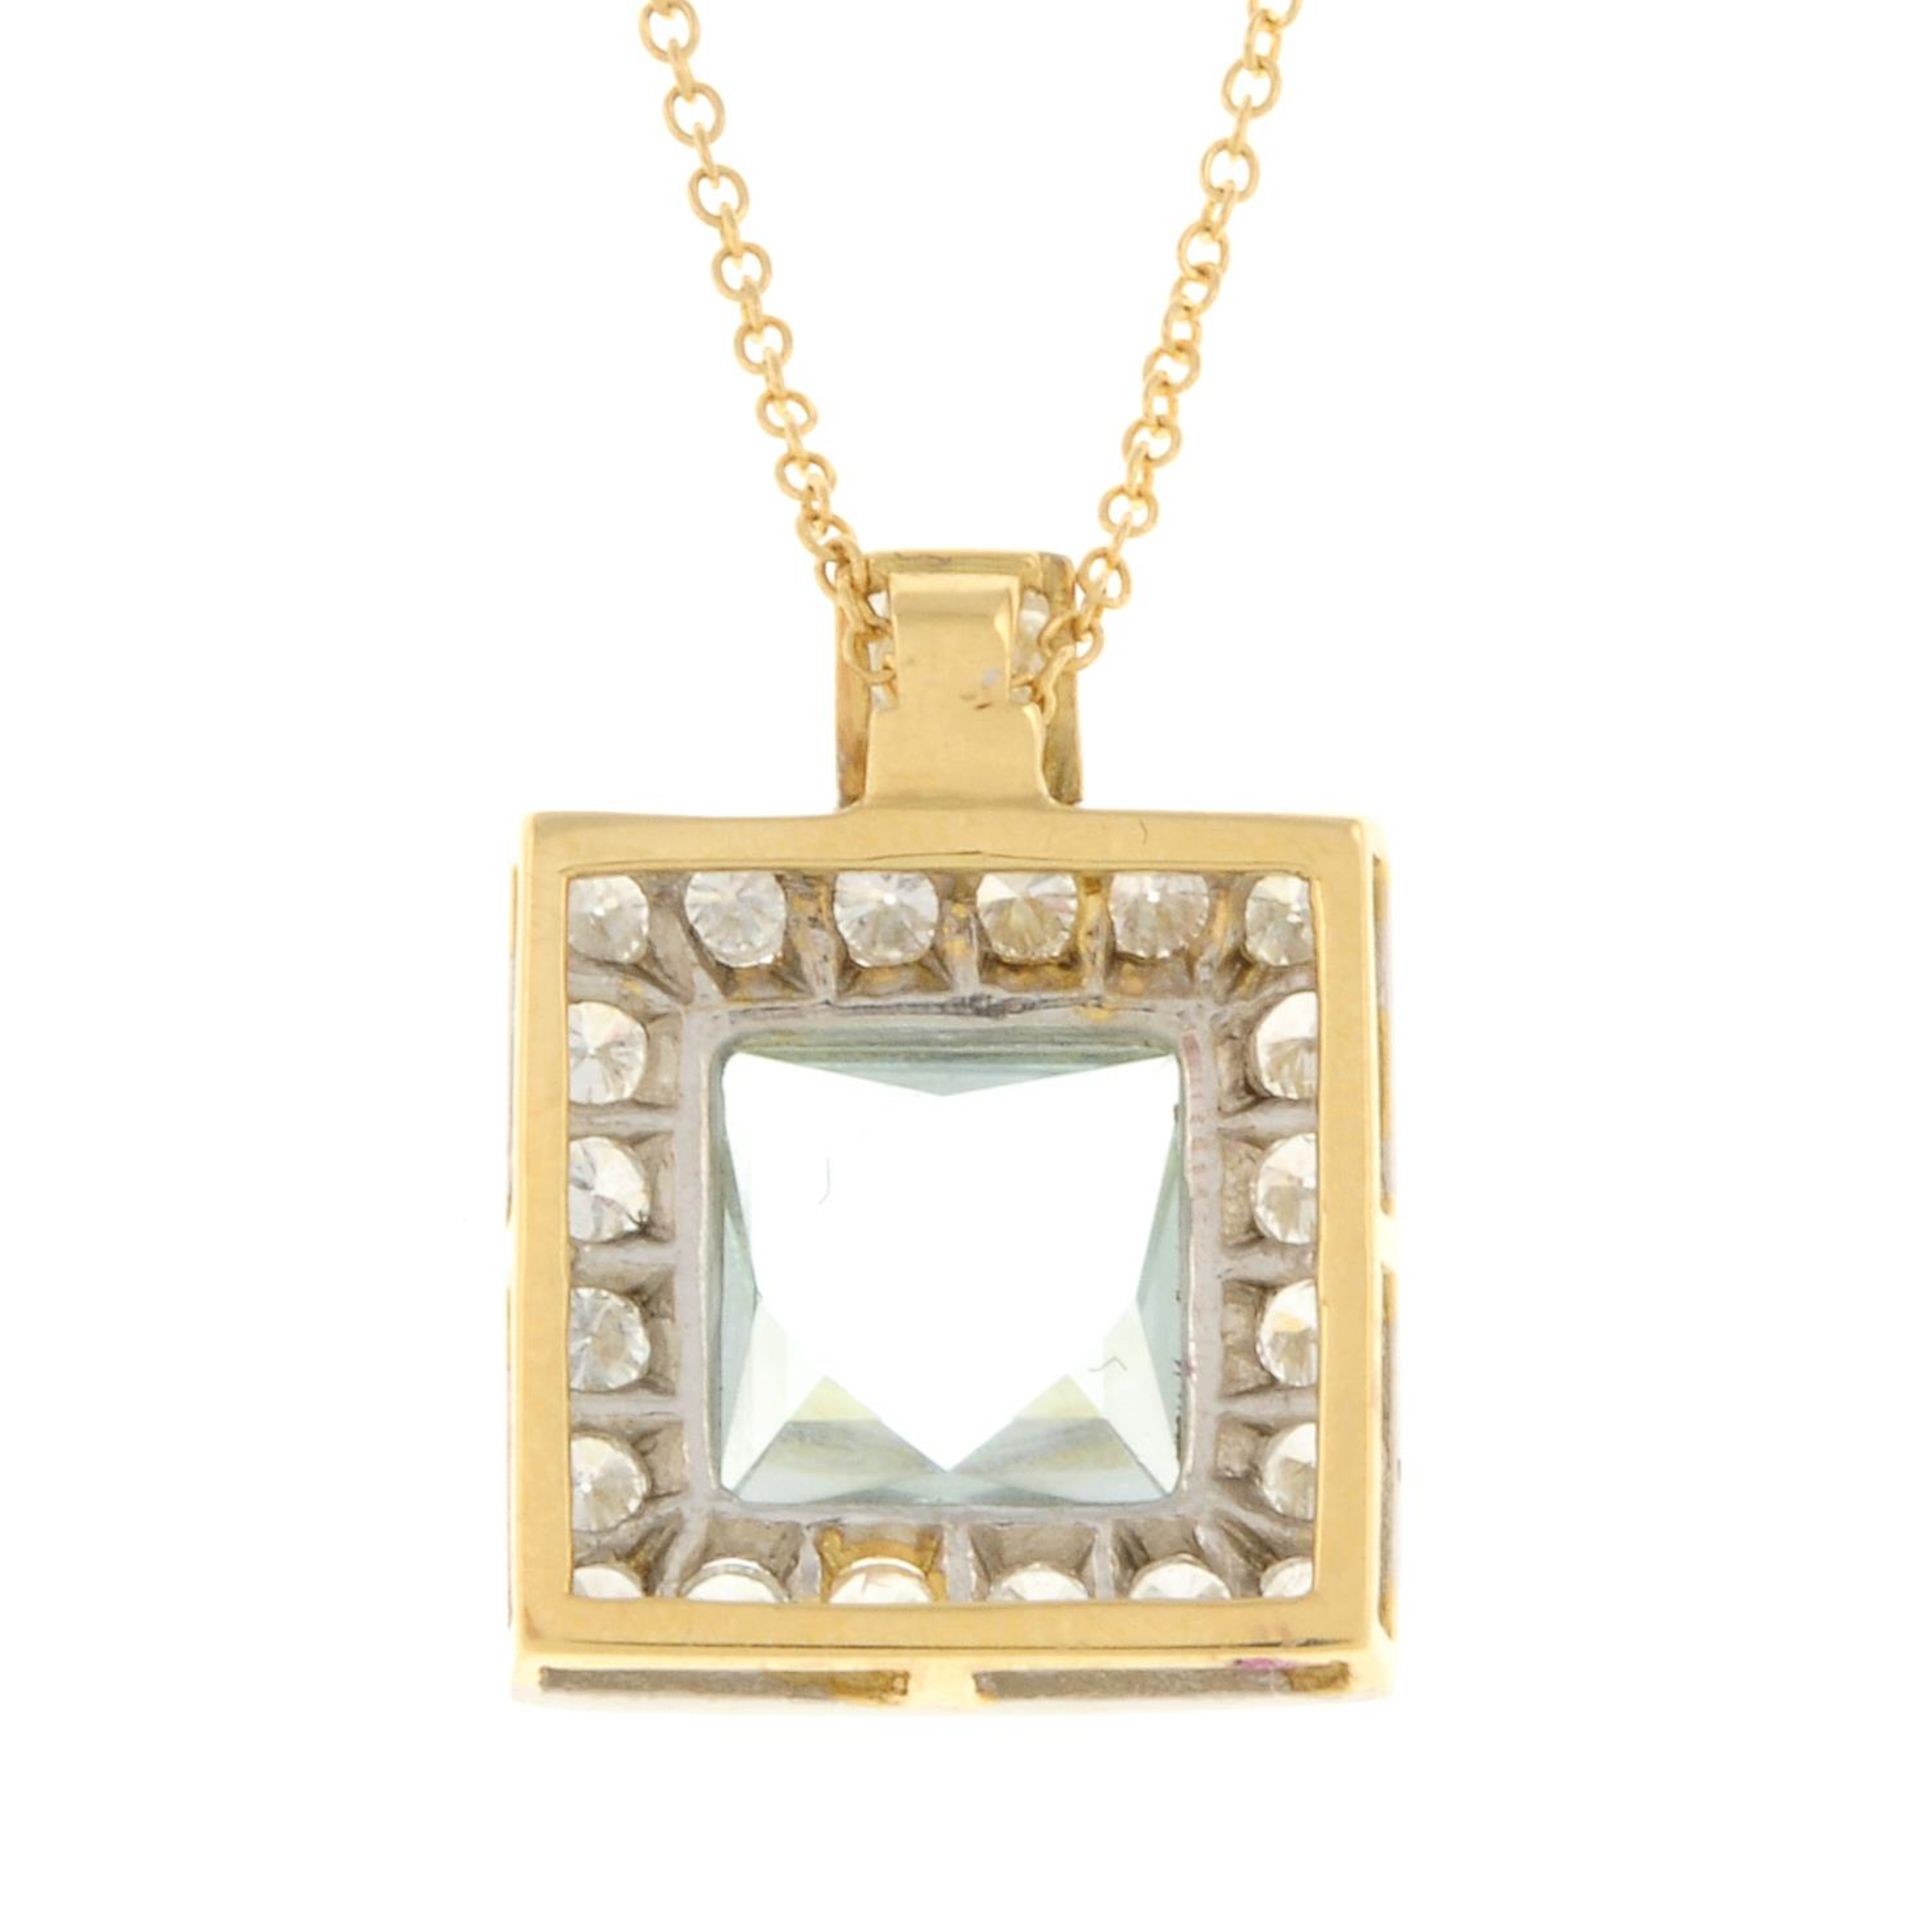 An aquamarine and vari-cut diamond cluster pendant, - Image 2 of 3